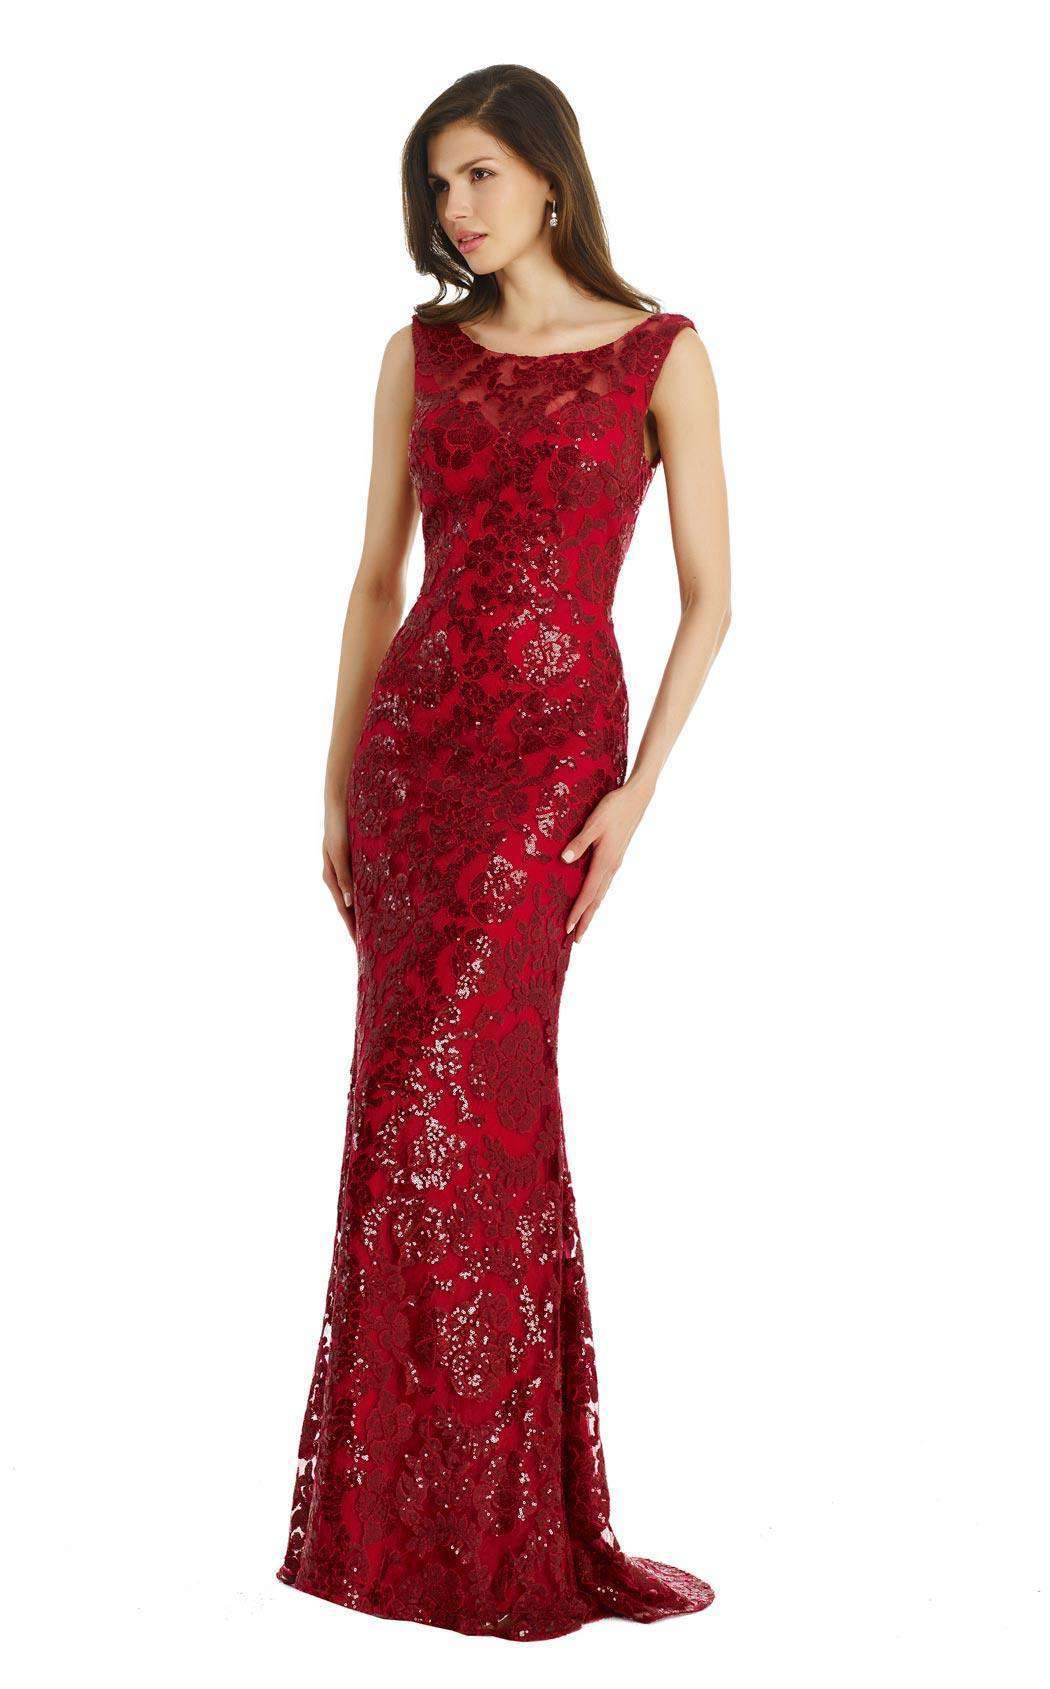 Morrell Maxie 15292 Dress | Buy Designer Gowns & Evening Dresses